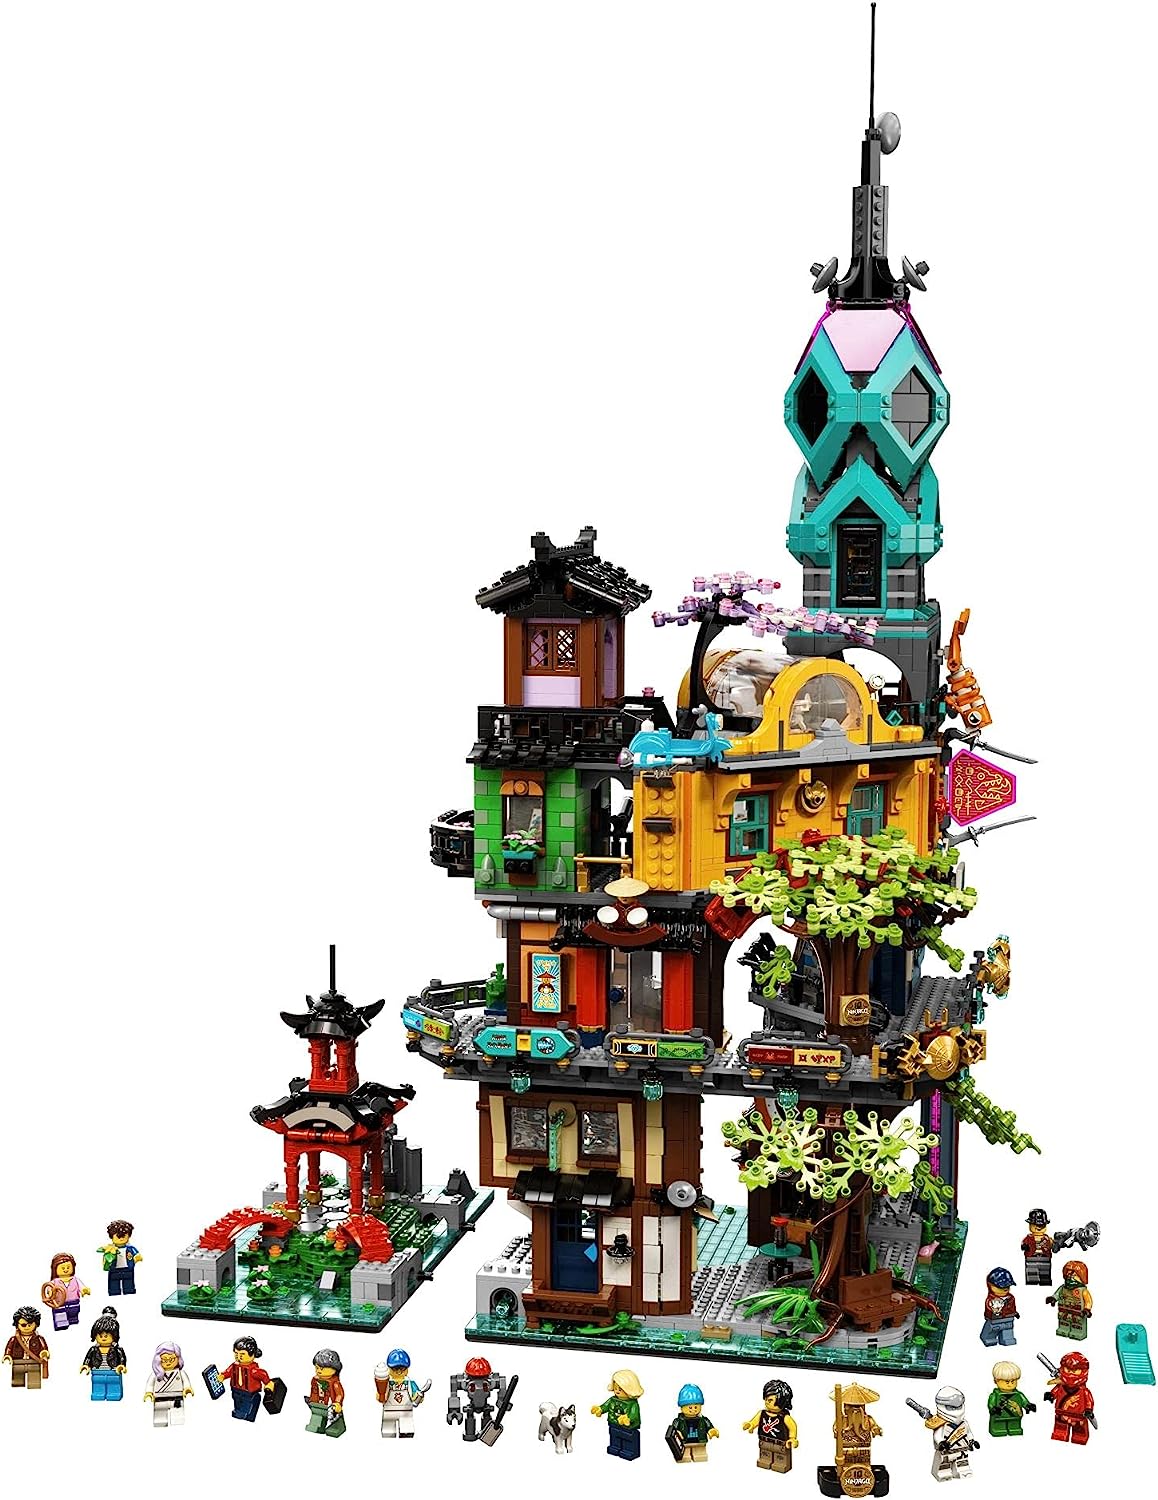 LEGO NINJAGO NINJAGO City Gardens 71741 Building Kit; Ninja House Playset Featuring 19 Minifigures, New 2021 (5,685 Pieces), Multicolor